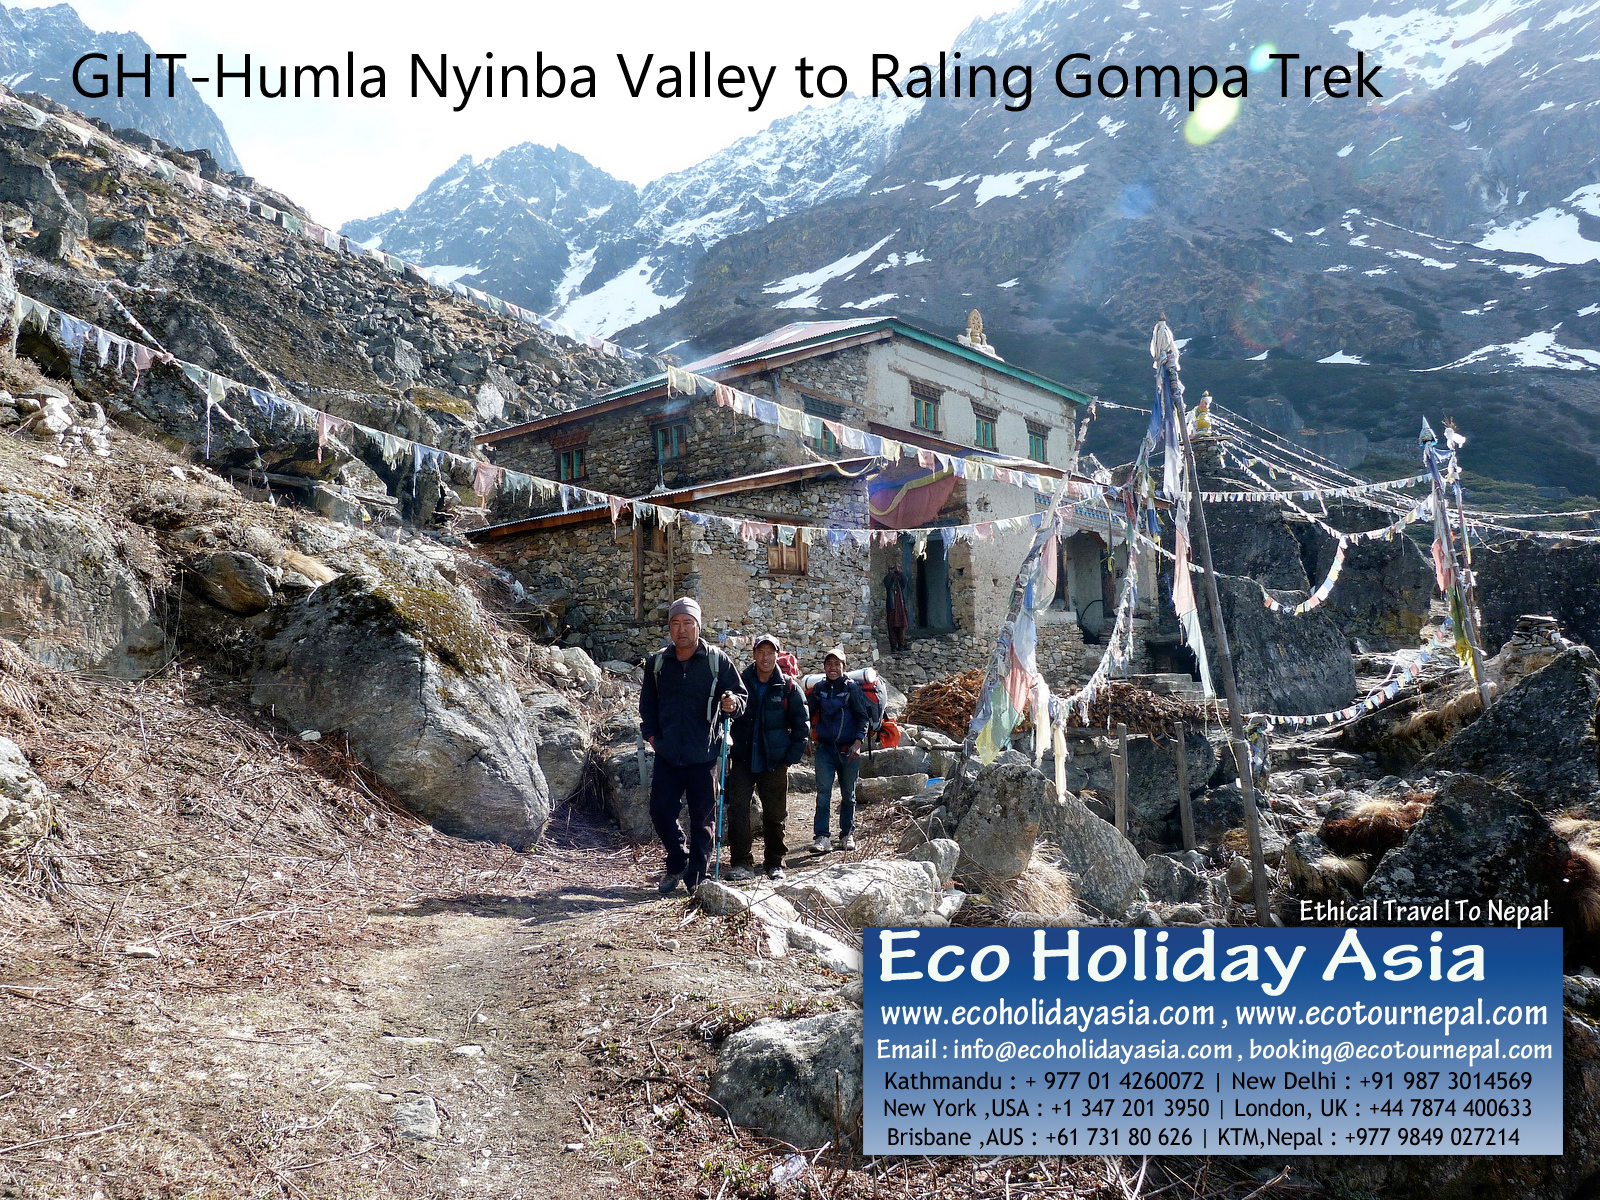 GHT-Humla Nyinba Valley to Raling Gompa Trek